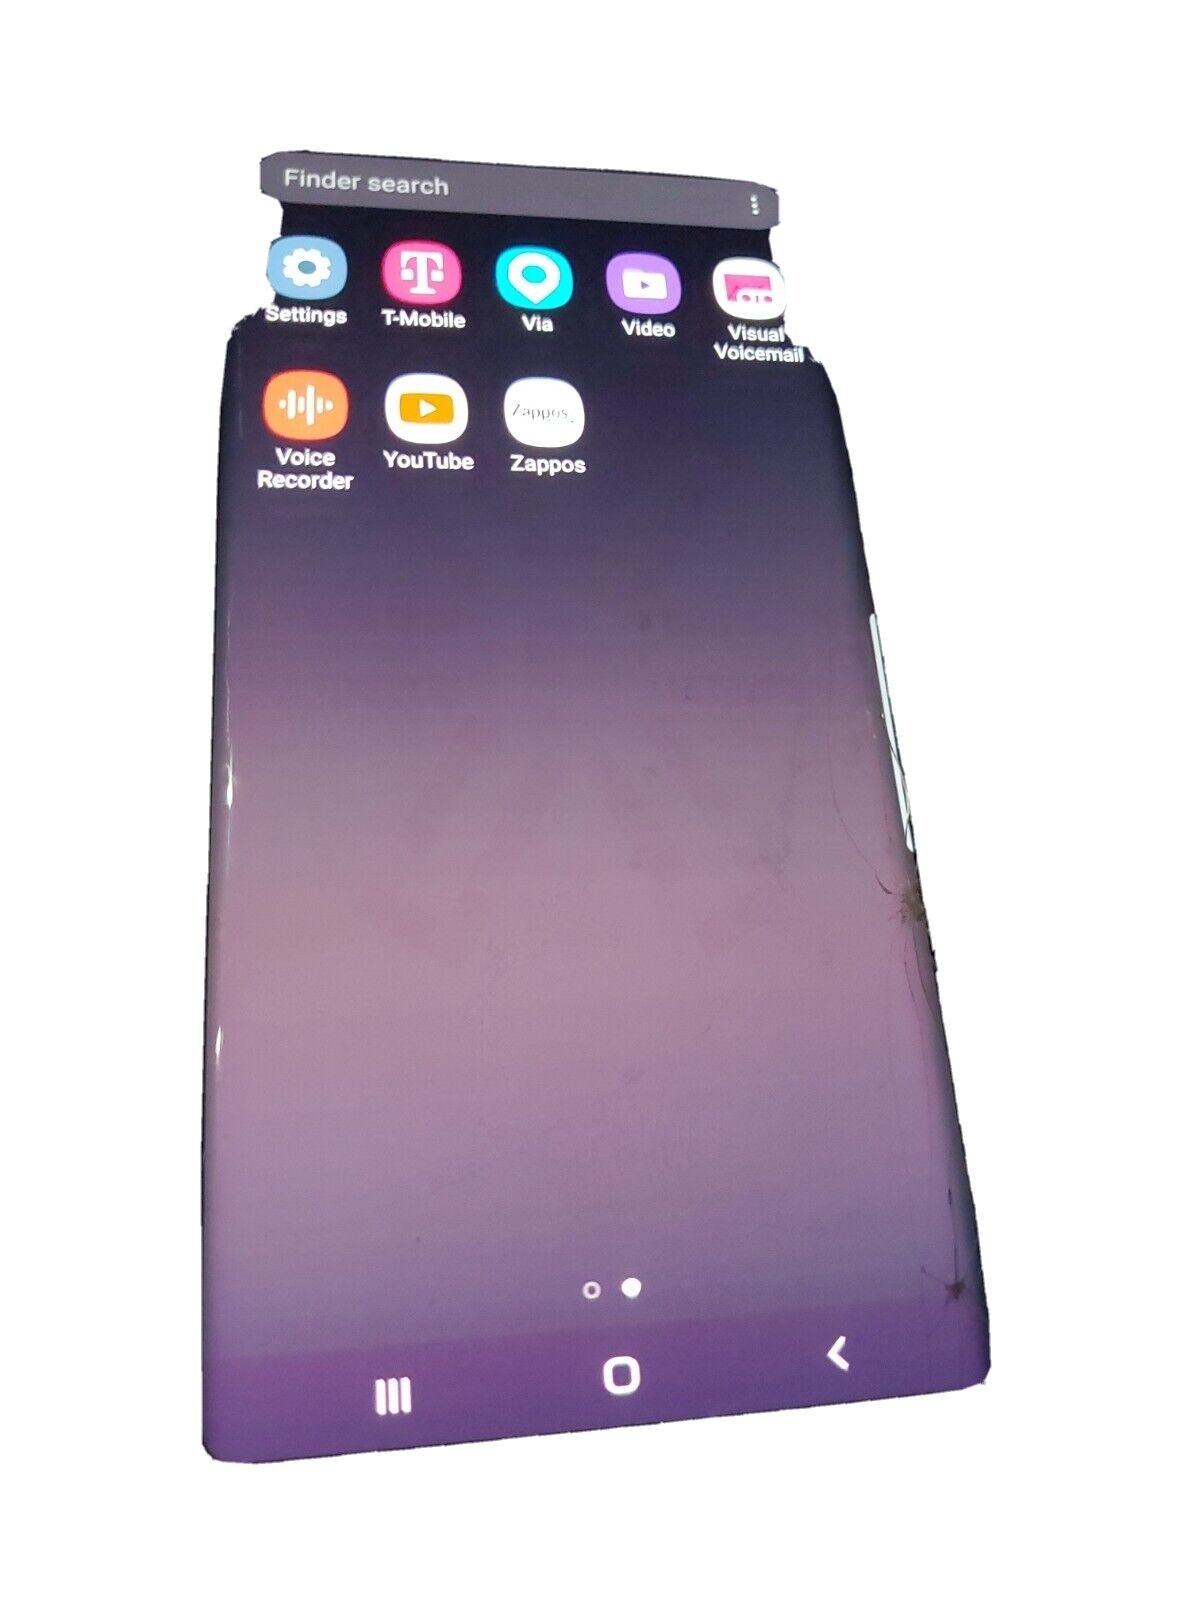 Samsung Galaxy Note8 SM-N950U - 64GB - Midnight Black (T-Mobile)